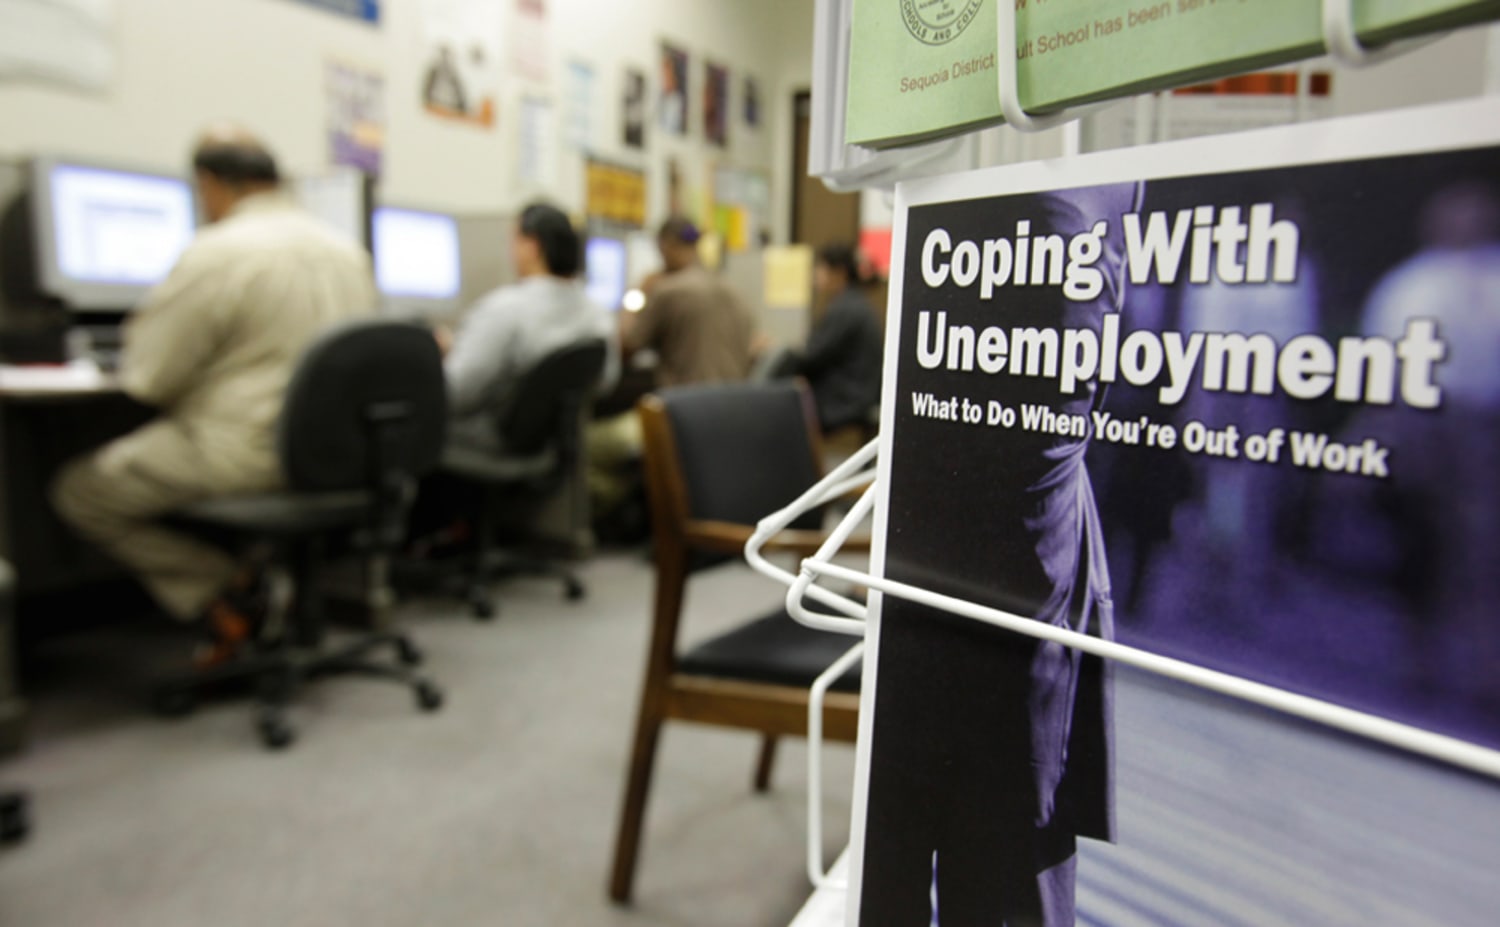 lack of computer skills foils many job-seekers